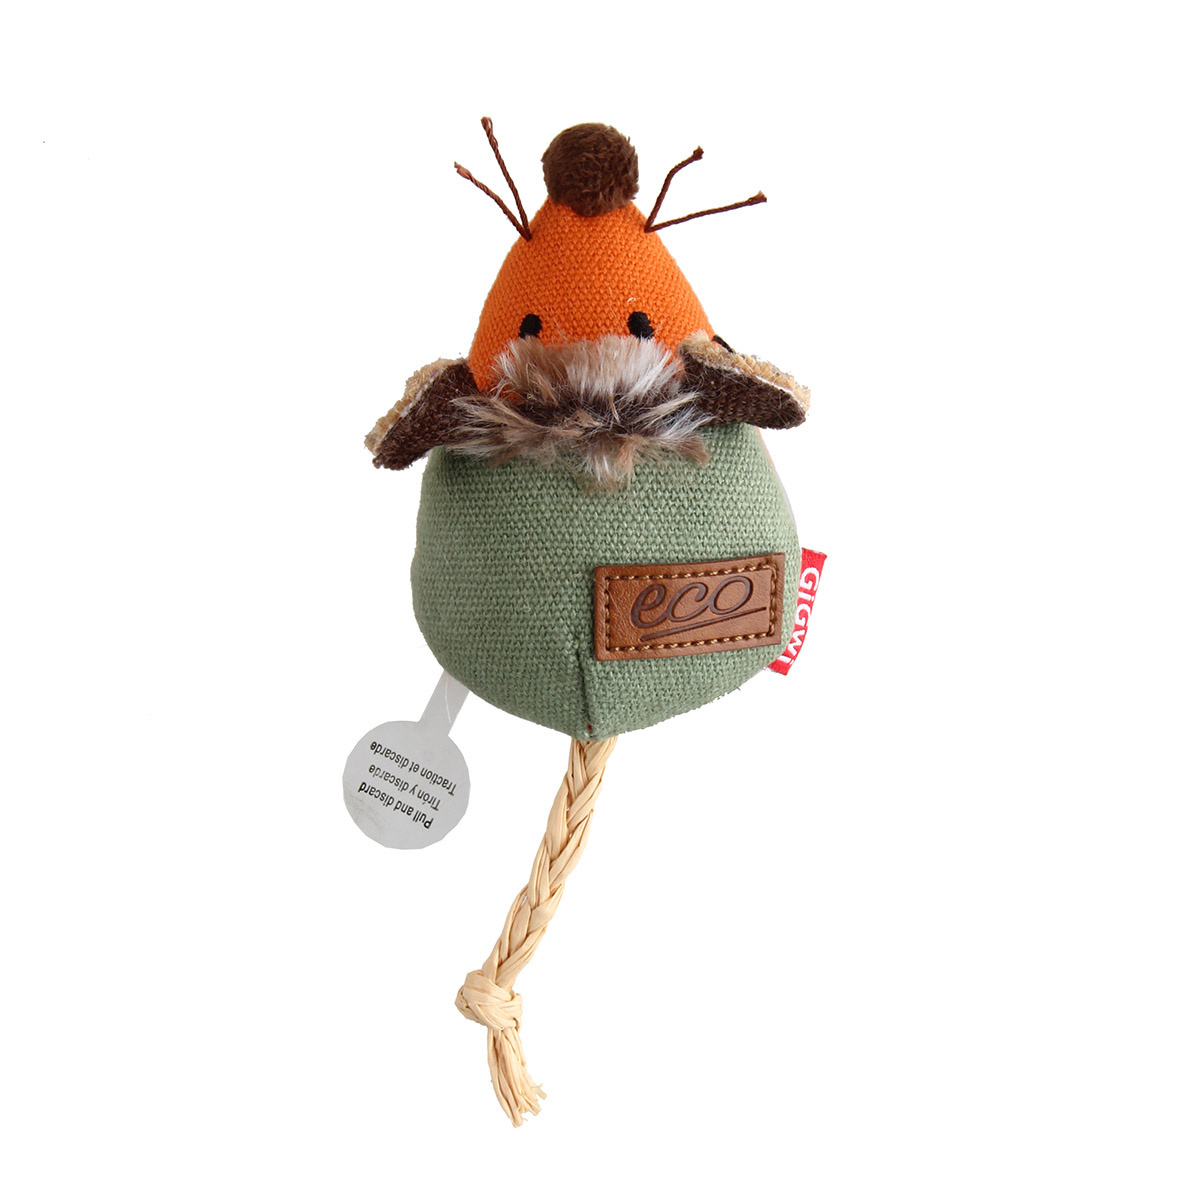 GiGwi GiGwi игрушка Мышка со звуковым чипом (17 г) gigwi gigwi игрушка мышка со звуковым чипом искусственный мех 30 г